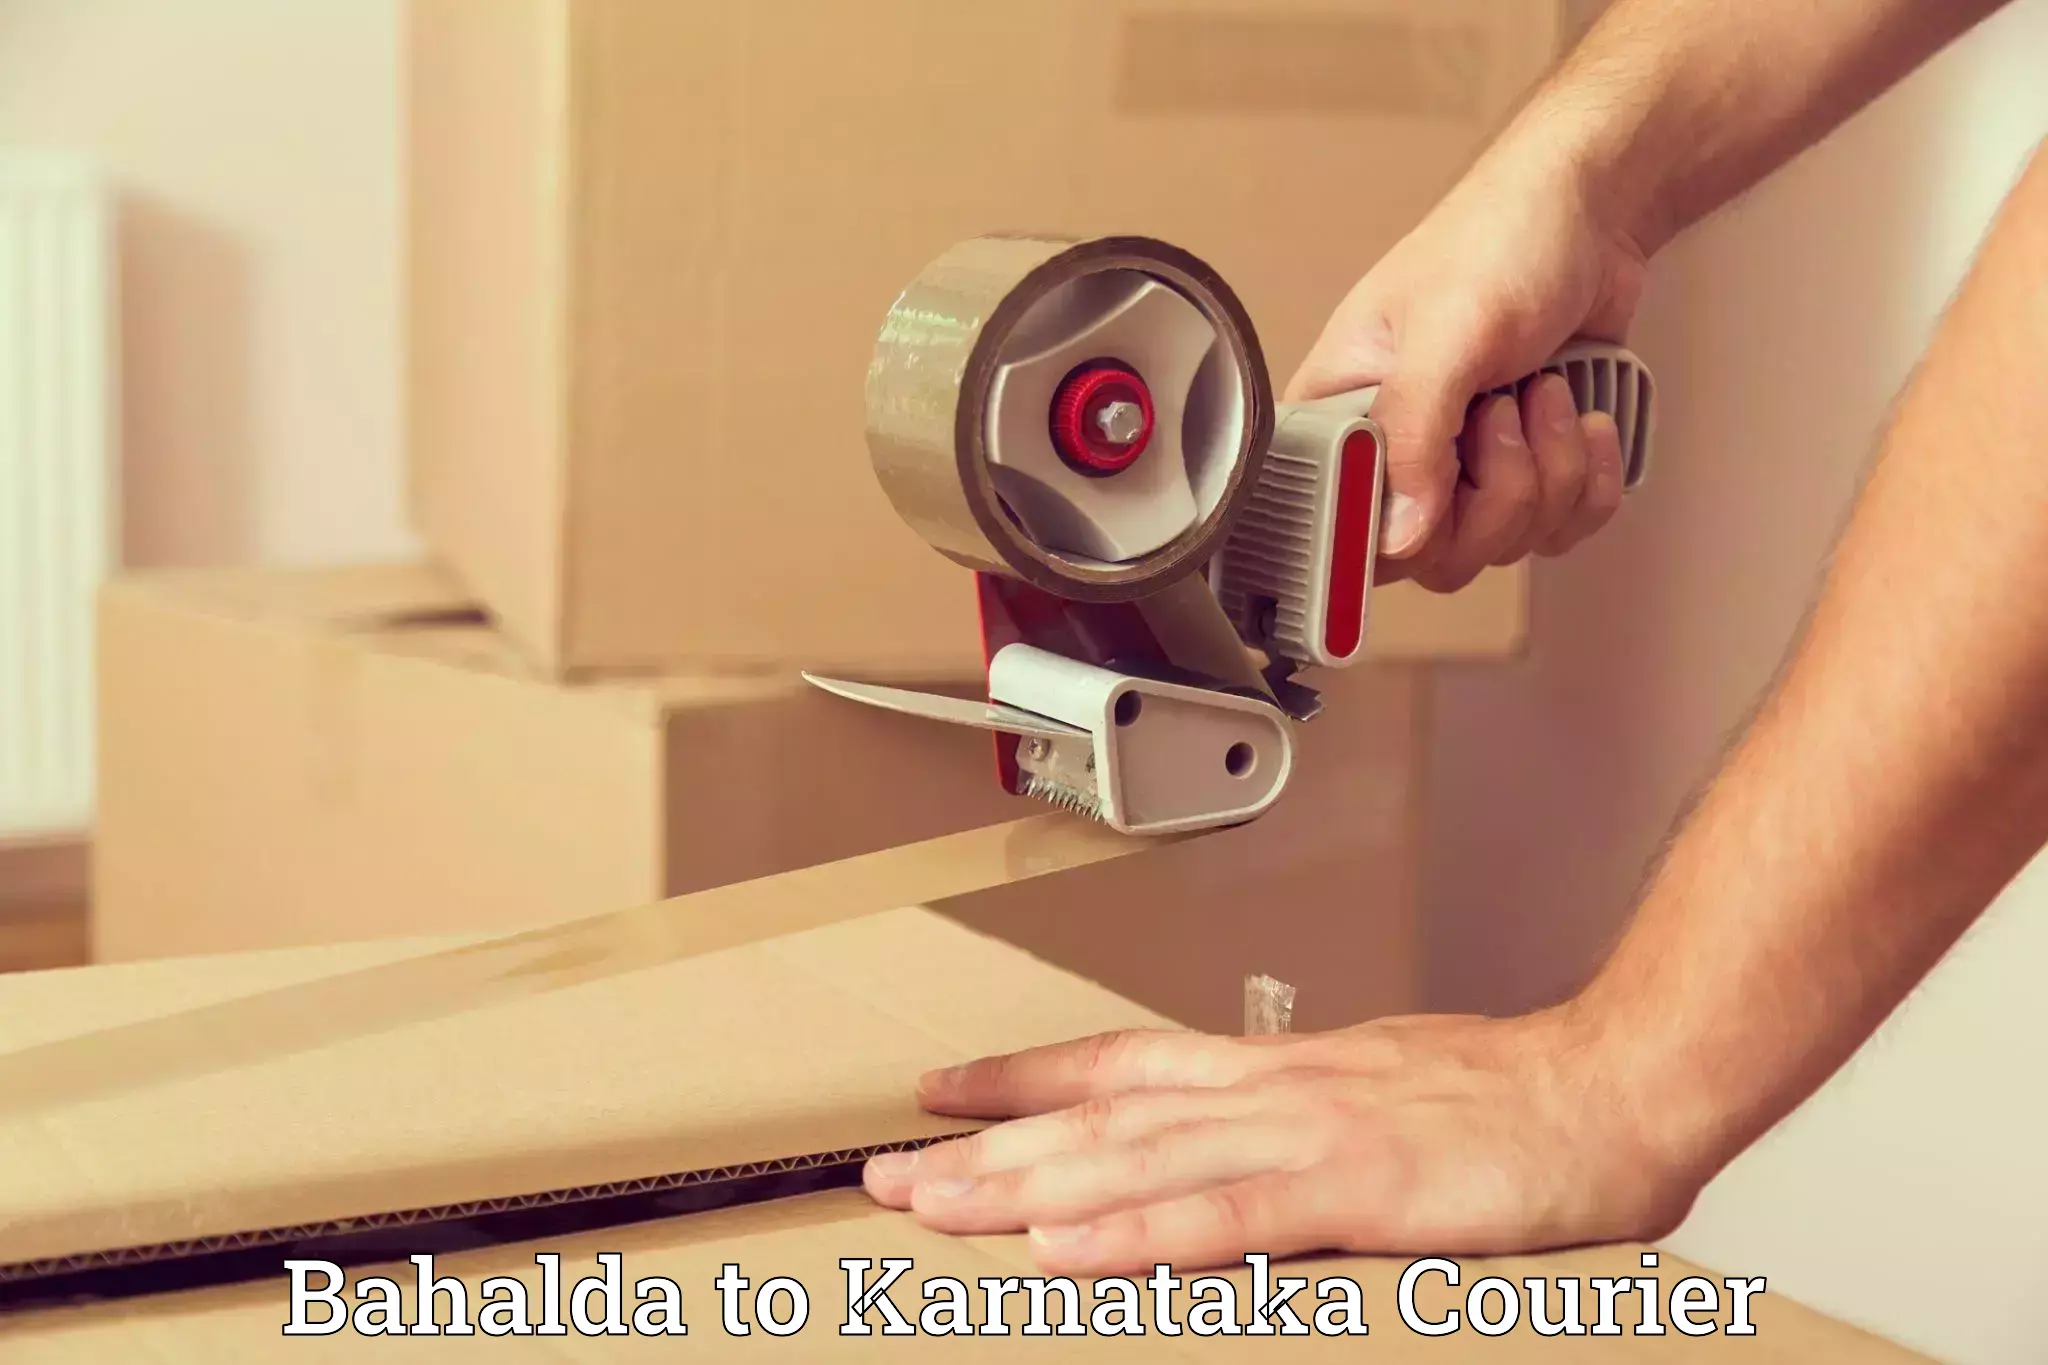 Efficient moving company Bahalda to Kanjarakatte